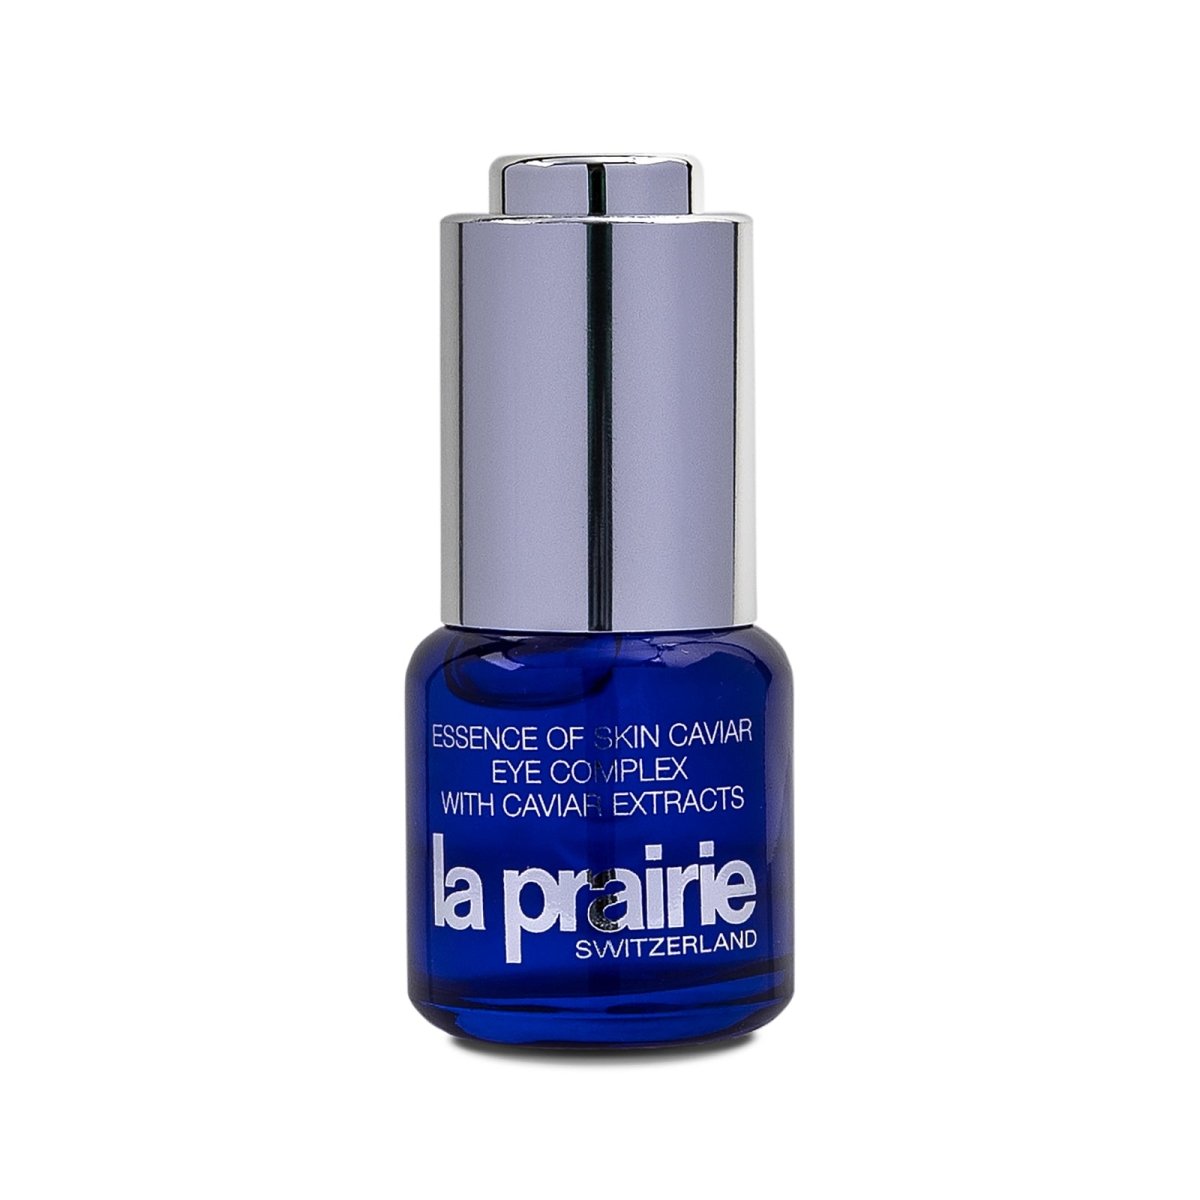 La Prairie Essence Of Skin Caviar Eye Complex - SkincareEssentials